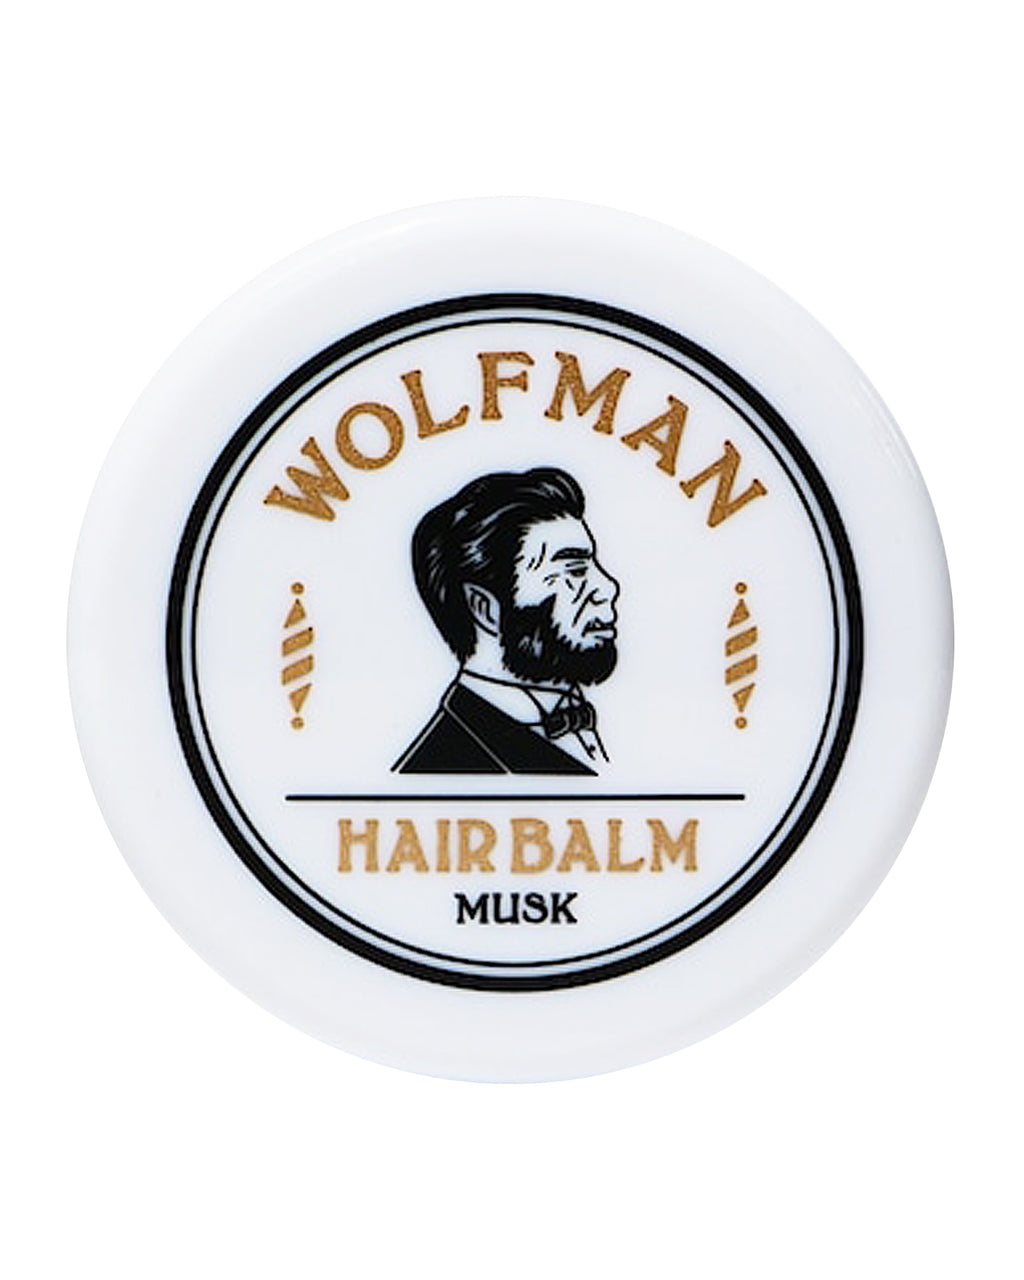 Wolfman Hair Balm Musk